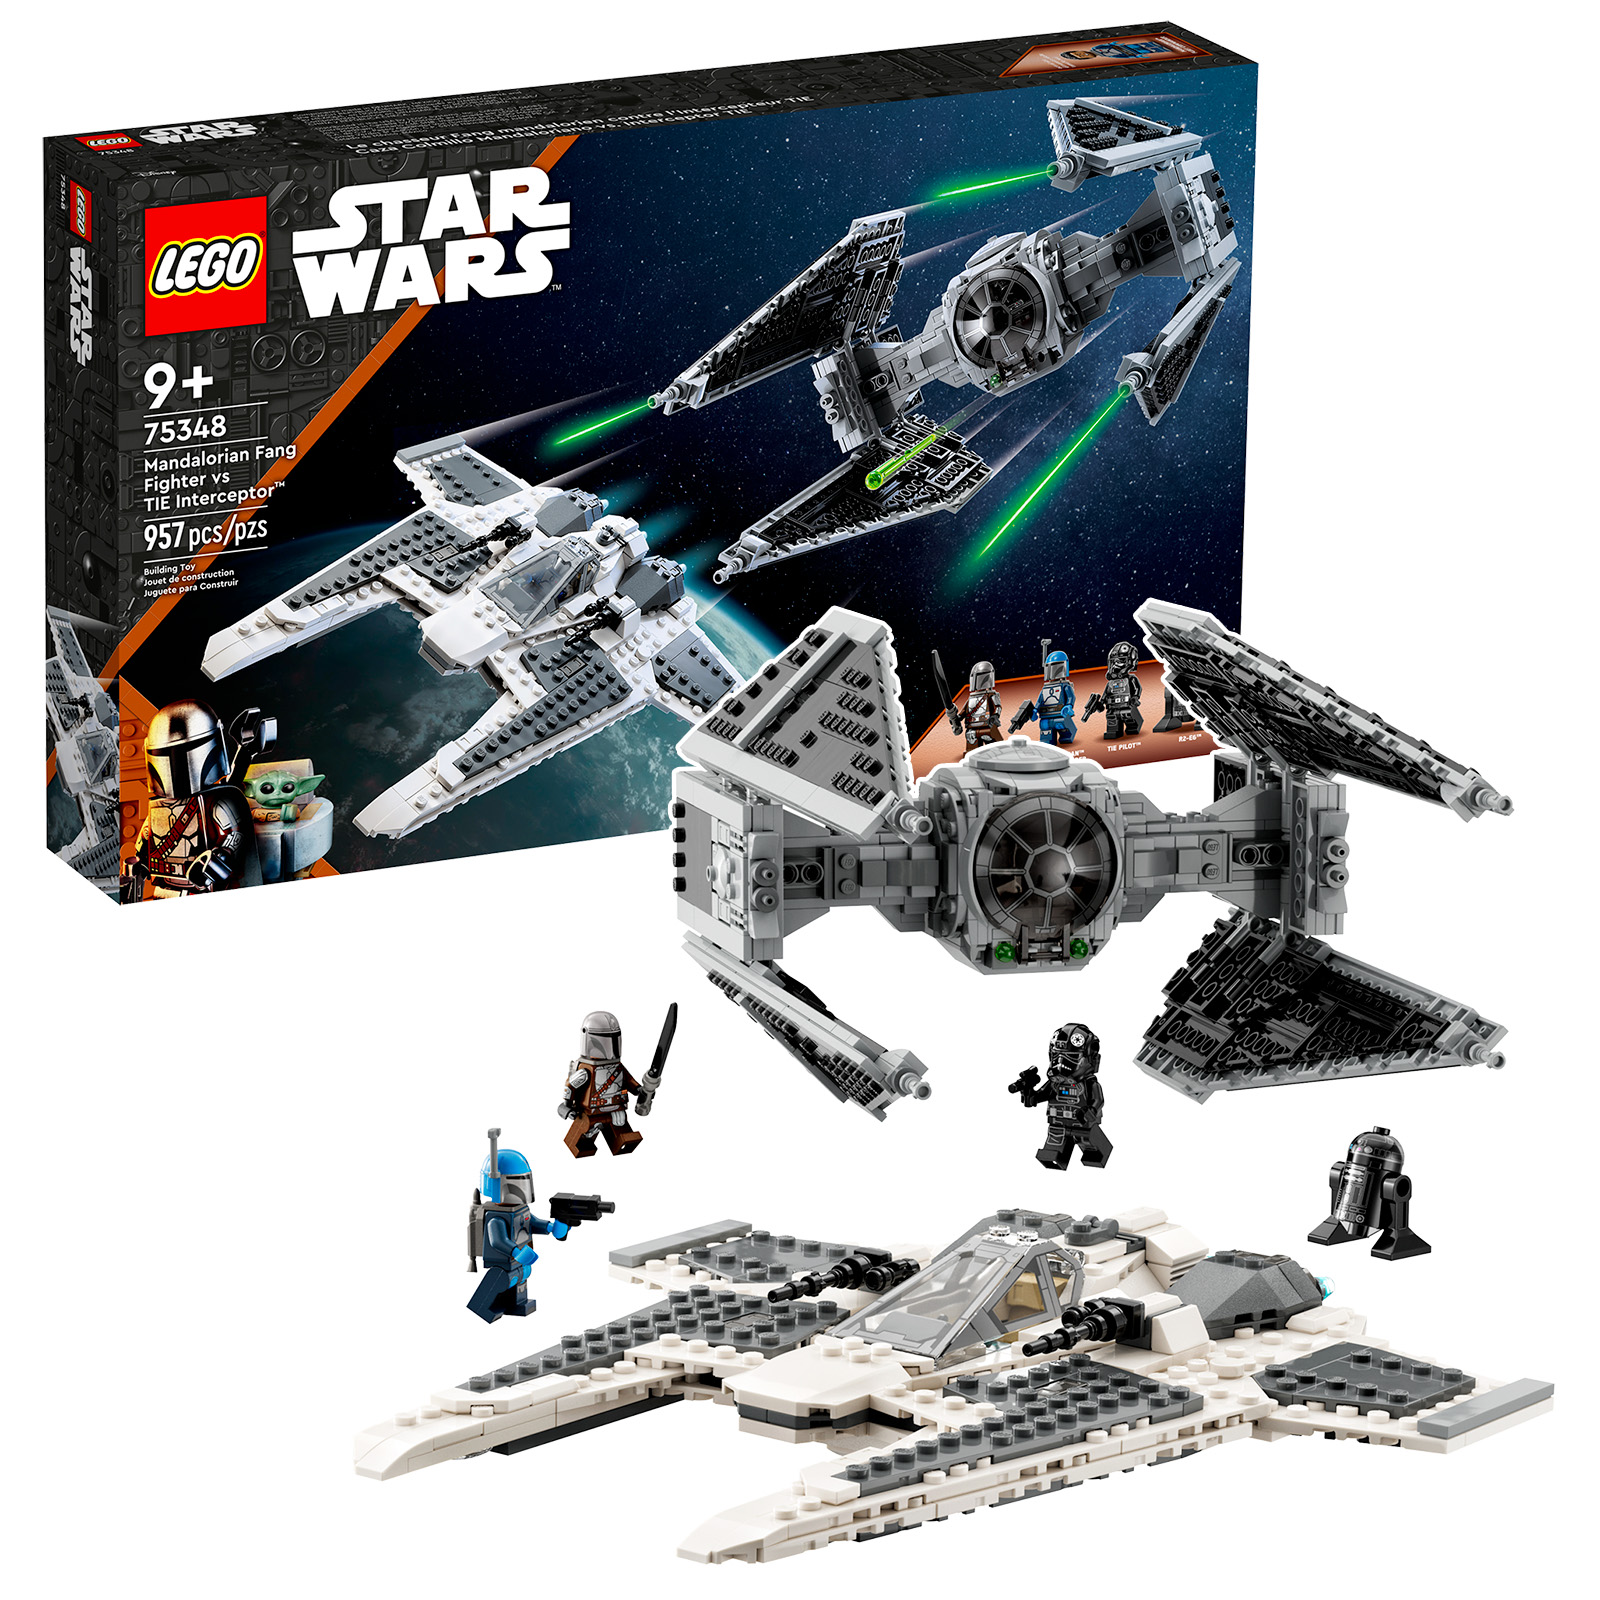 LEGO Star Wars 75348 Mandalorian Fang Fighter vs. TIE Interceptor: set ...